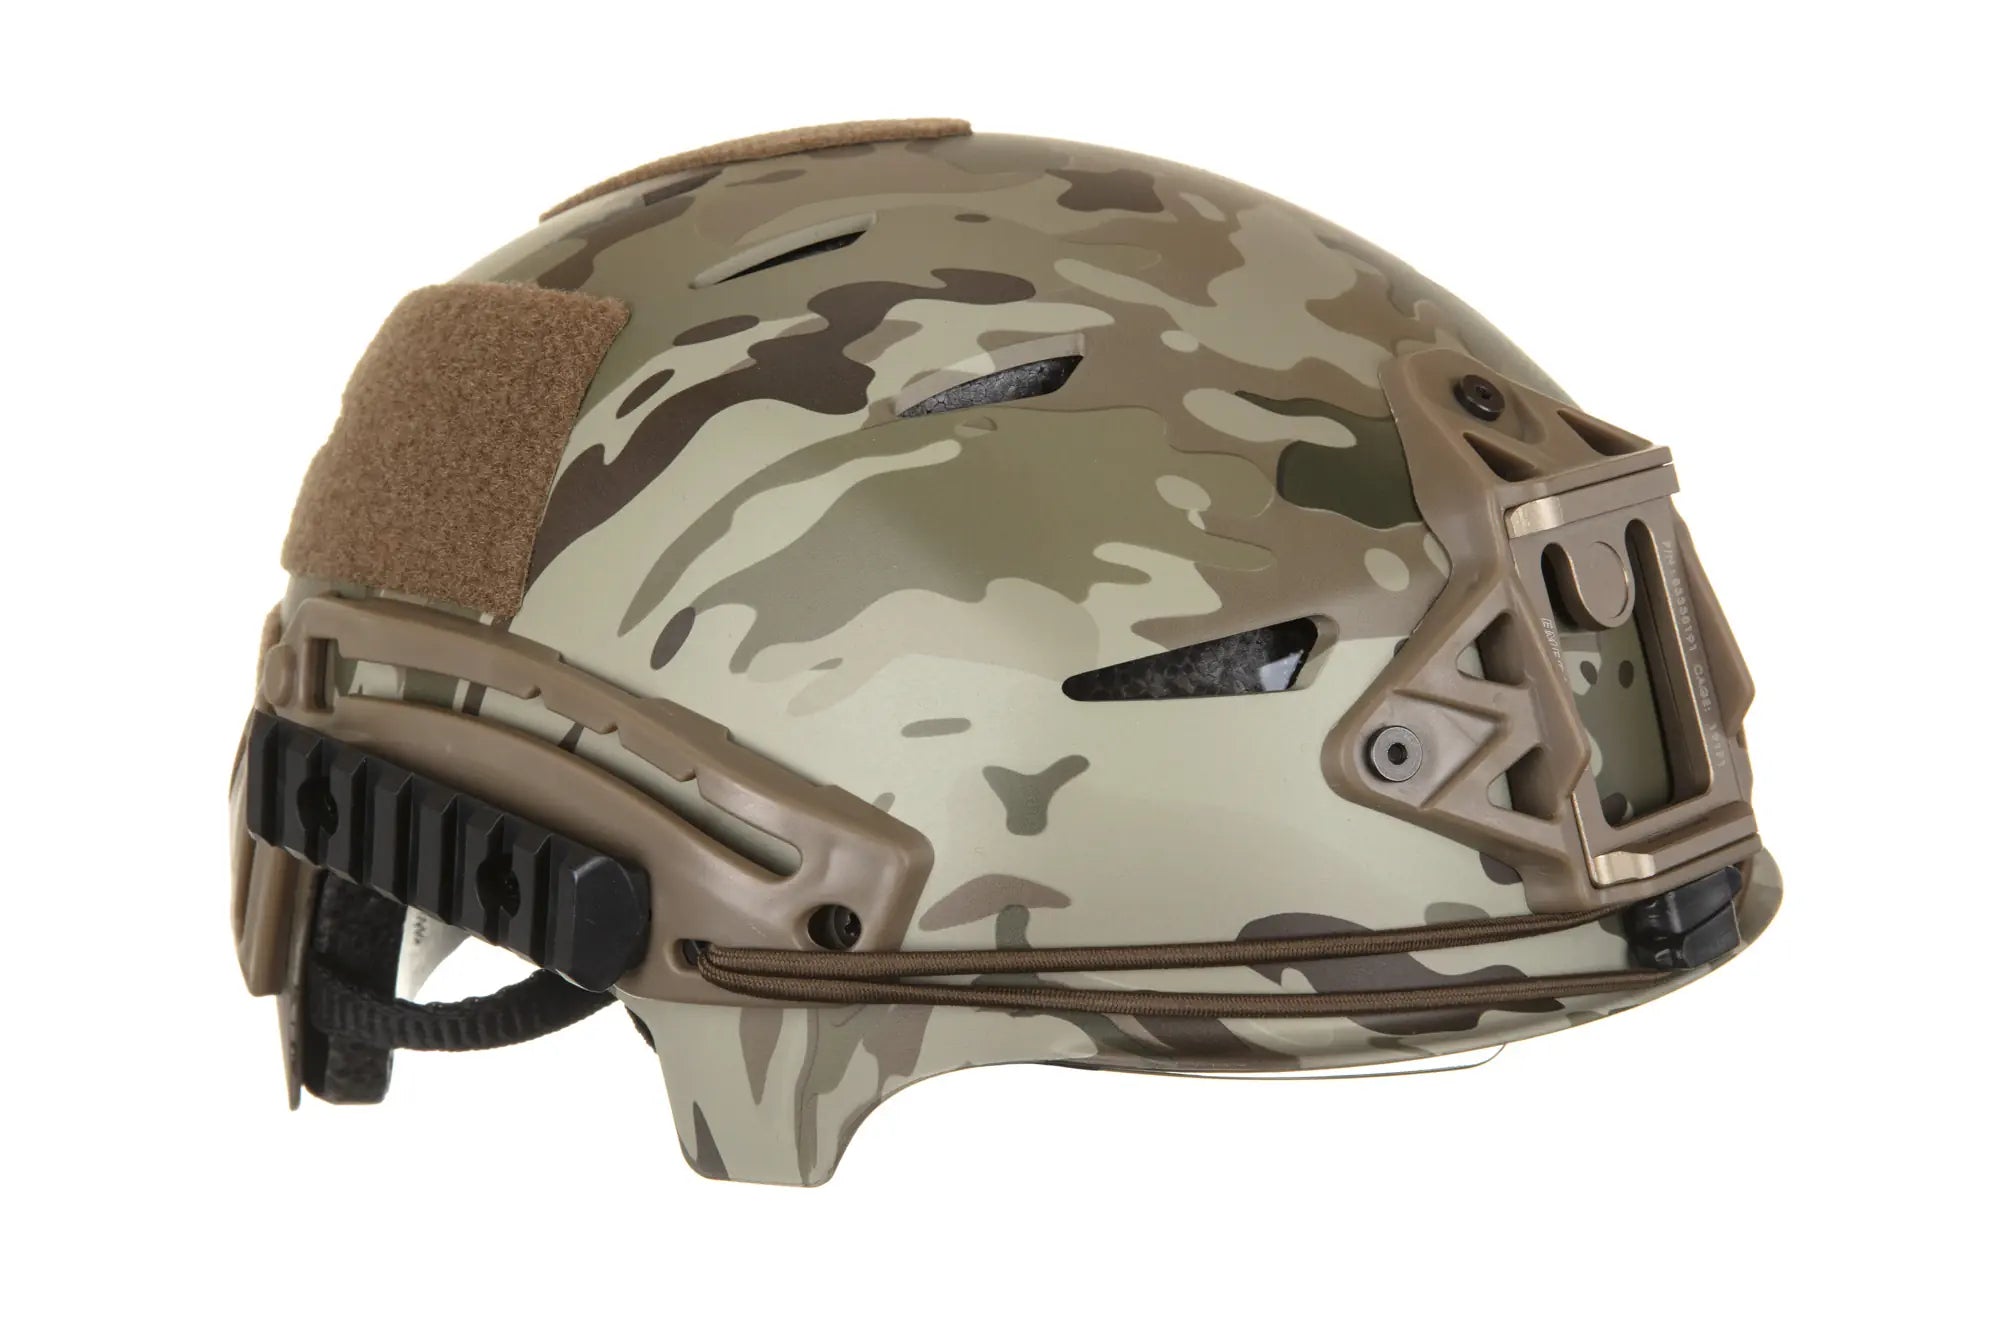 Replica of Emerson Gear EXF Bump Protective Multicam helmet-3